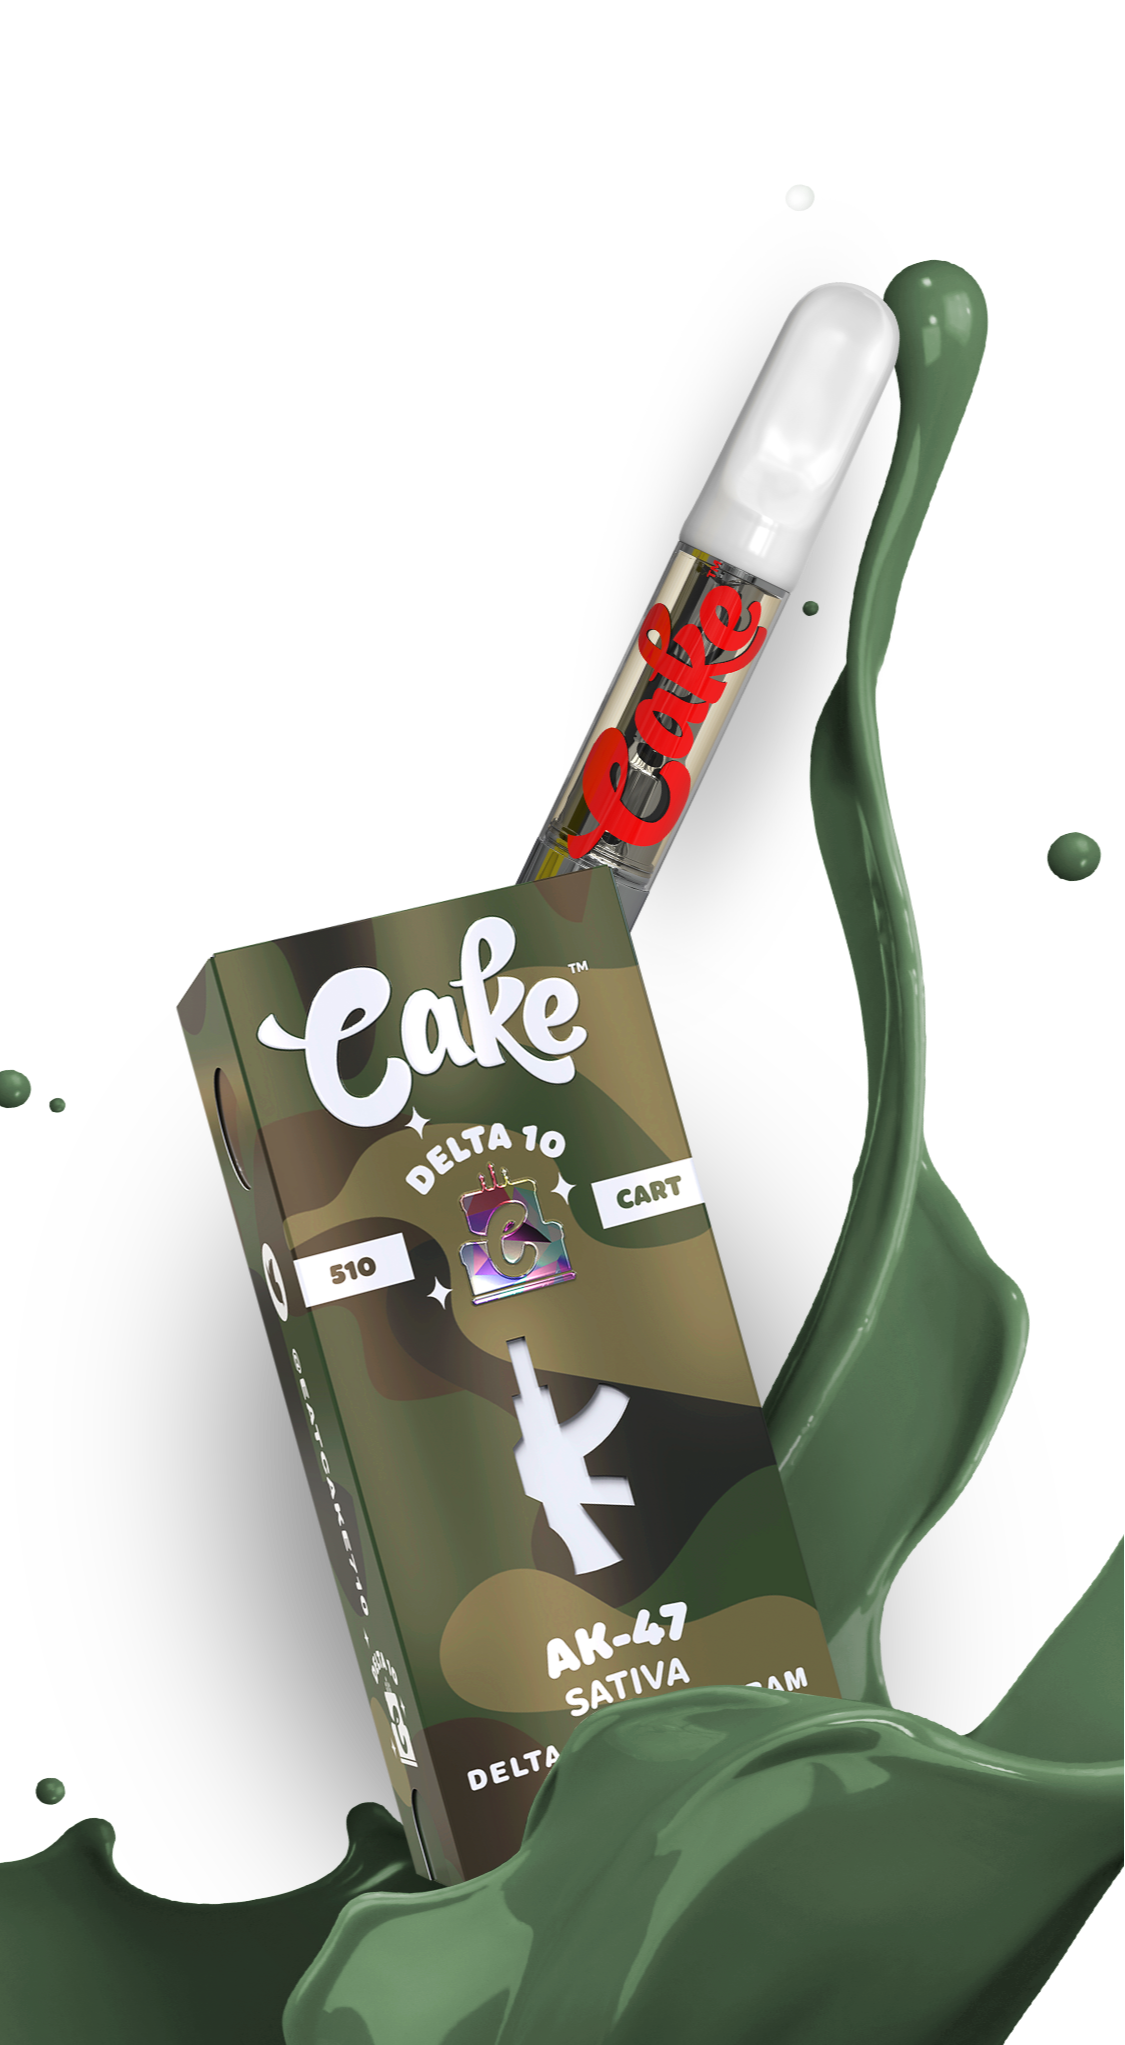 Cake Delta 10 AK-47 510 cartridge